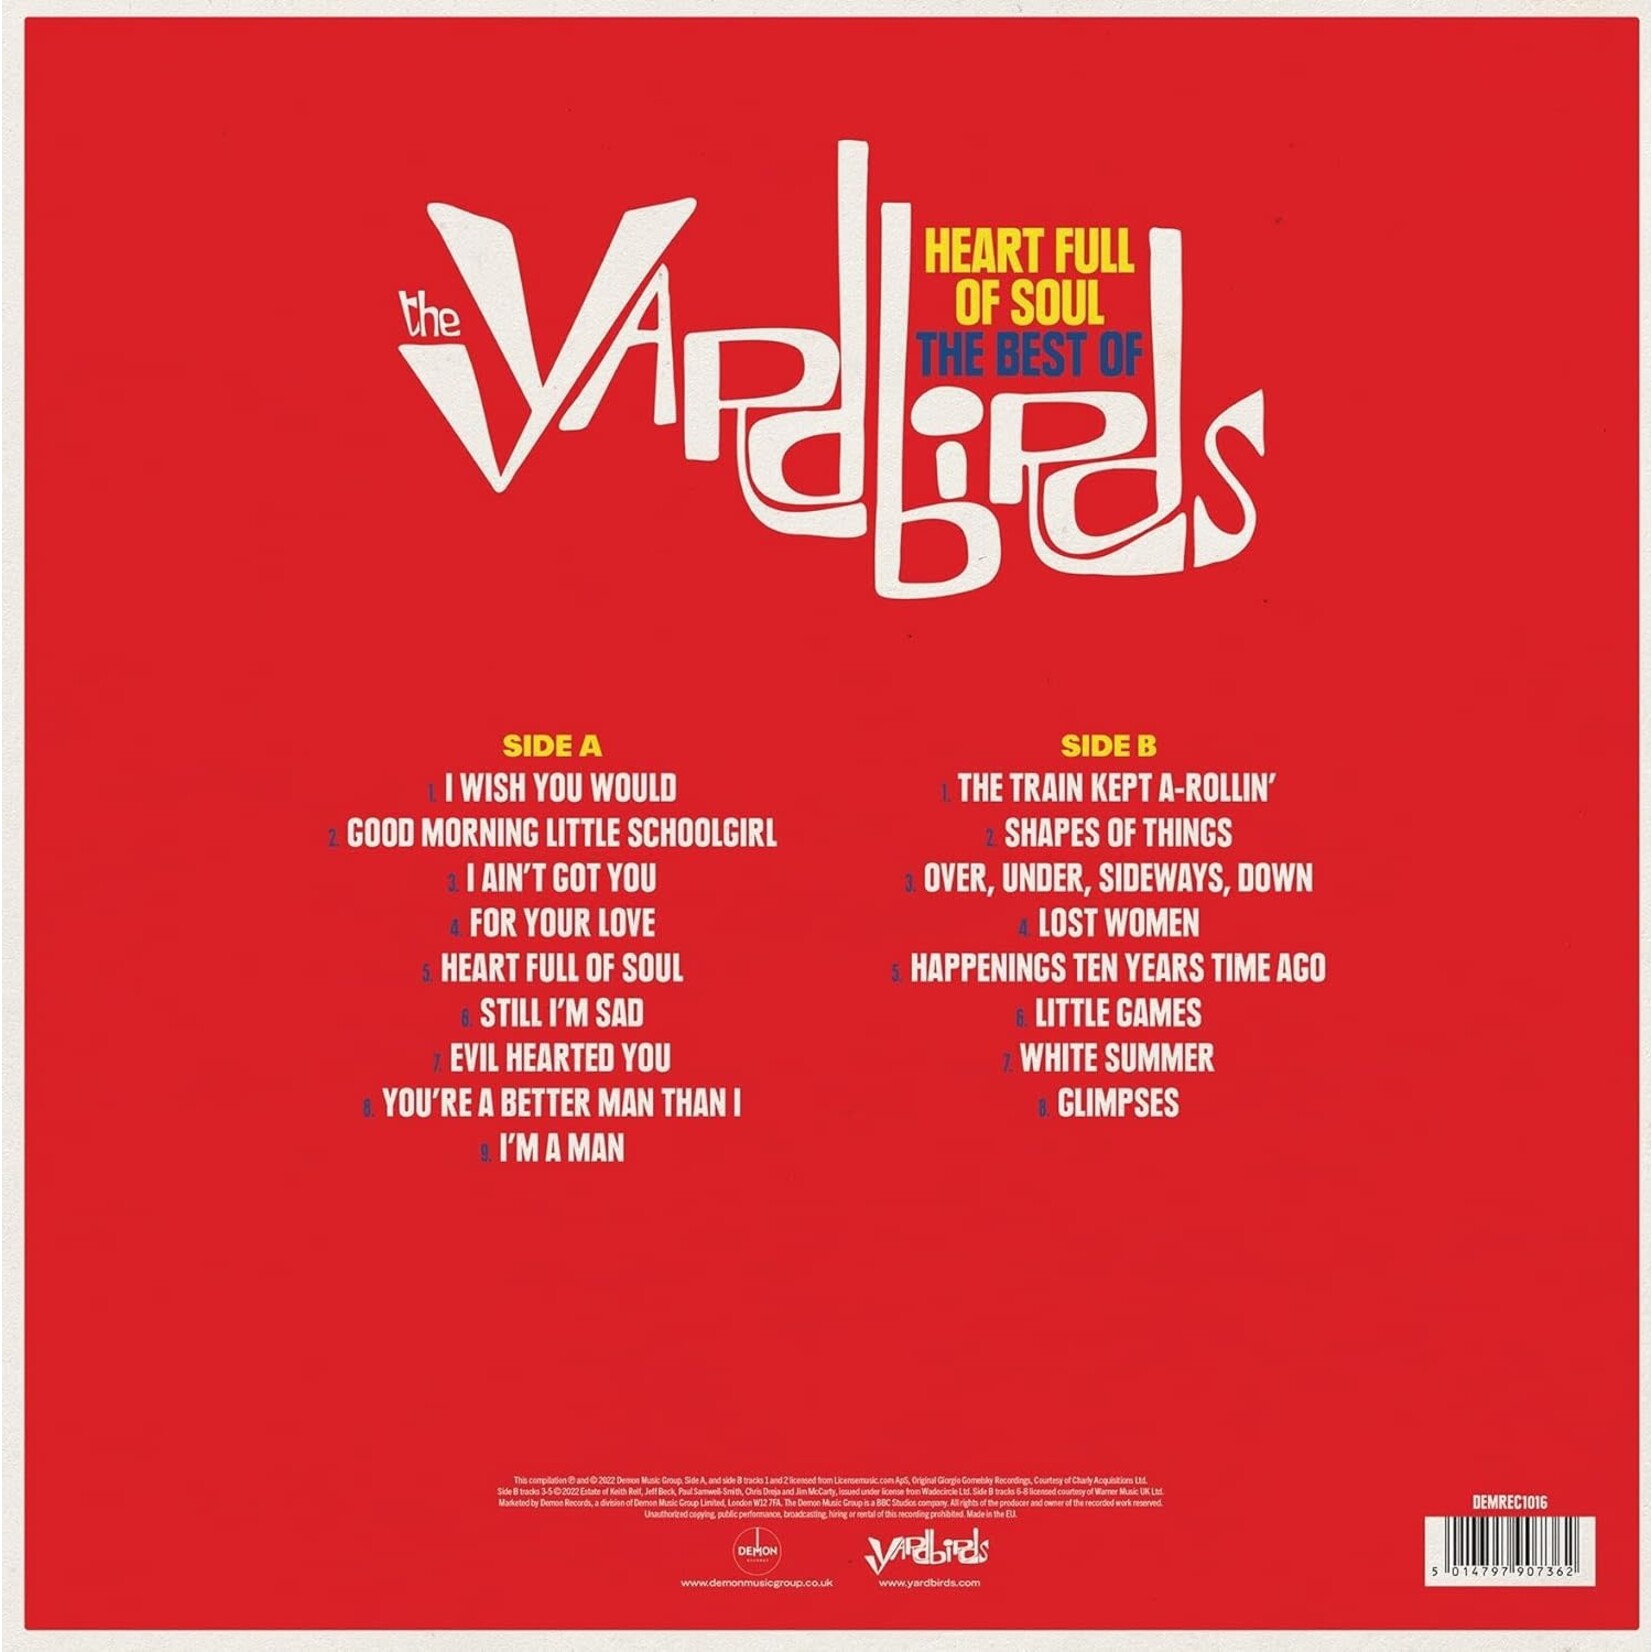 Vinyl The Yardbirds - Heart Full of Soul : The Best of The Yardbirds.  UK Import